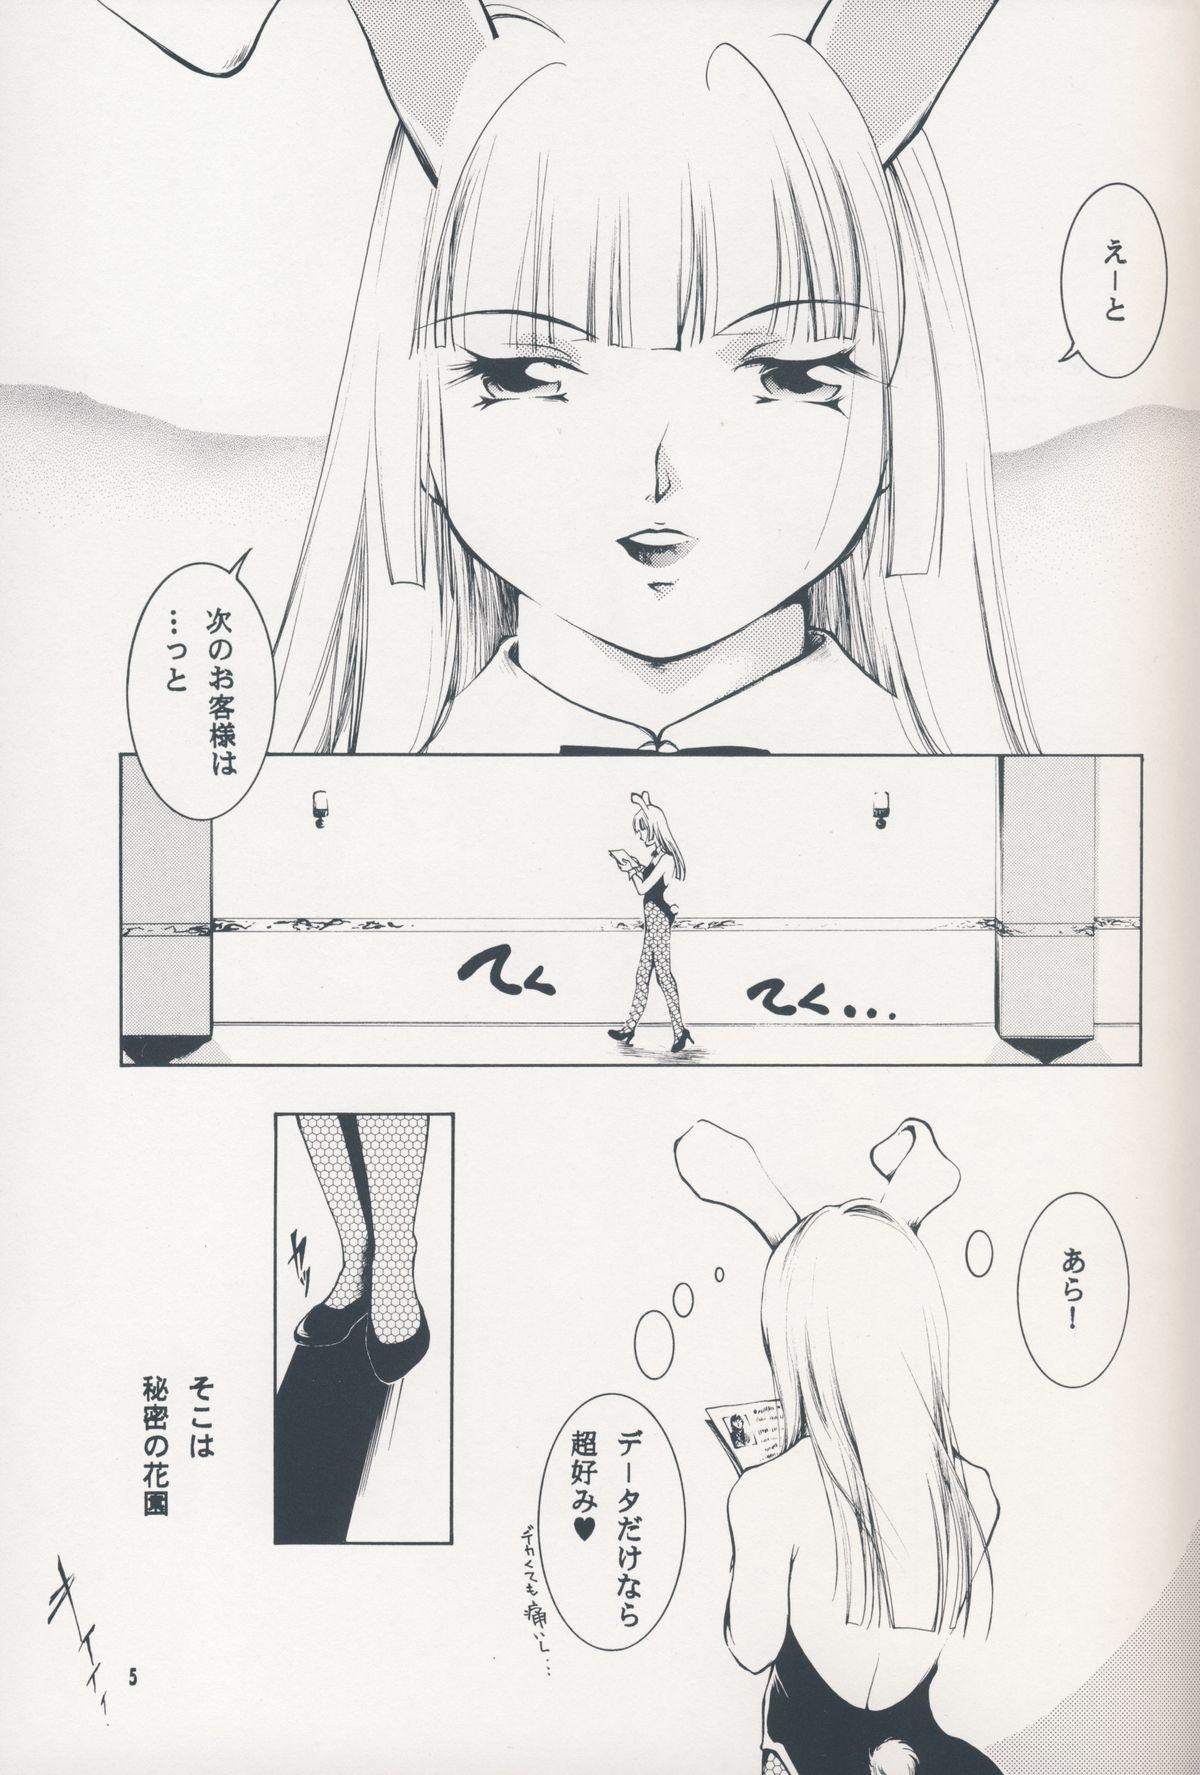 Time Hadashi no VAMPIRE 7 - Vampire princess miyu Yanks Featured - Page 4